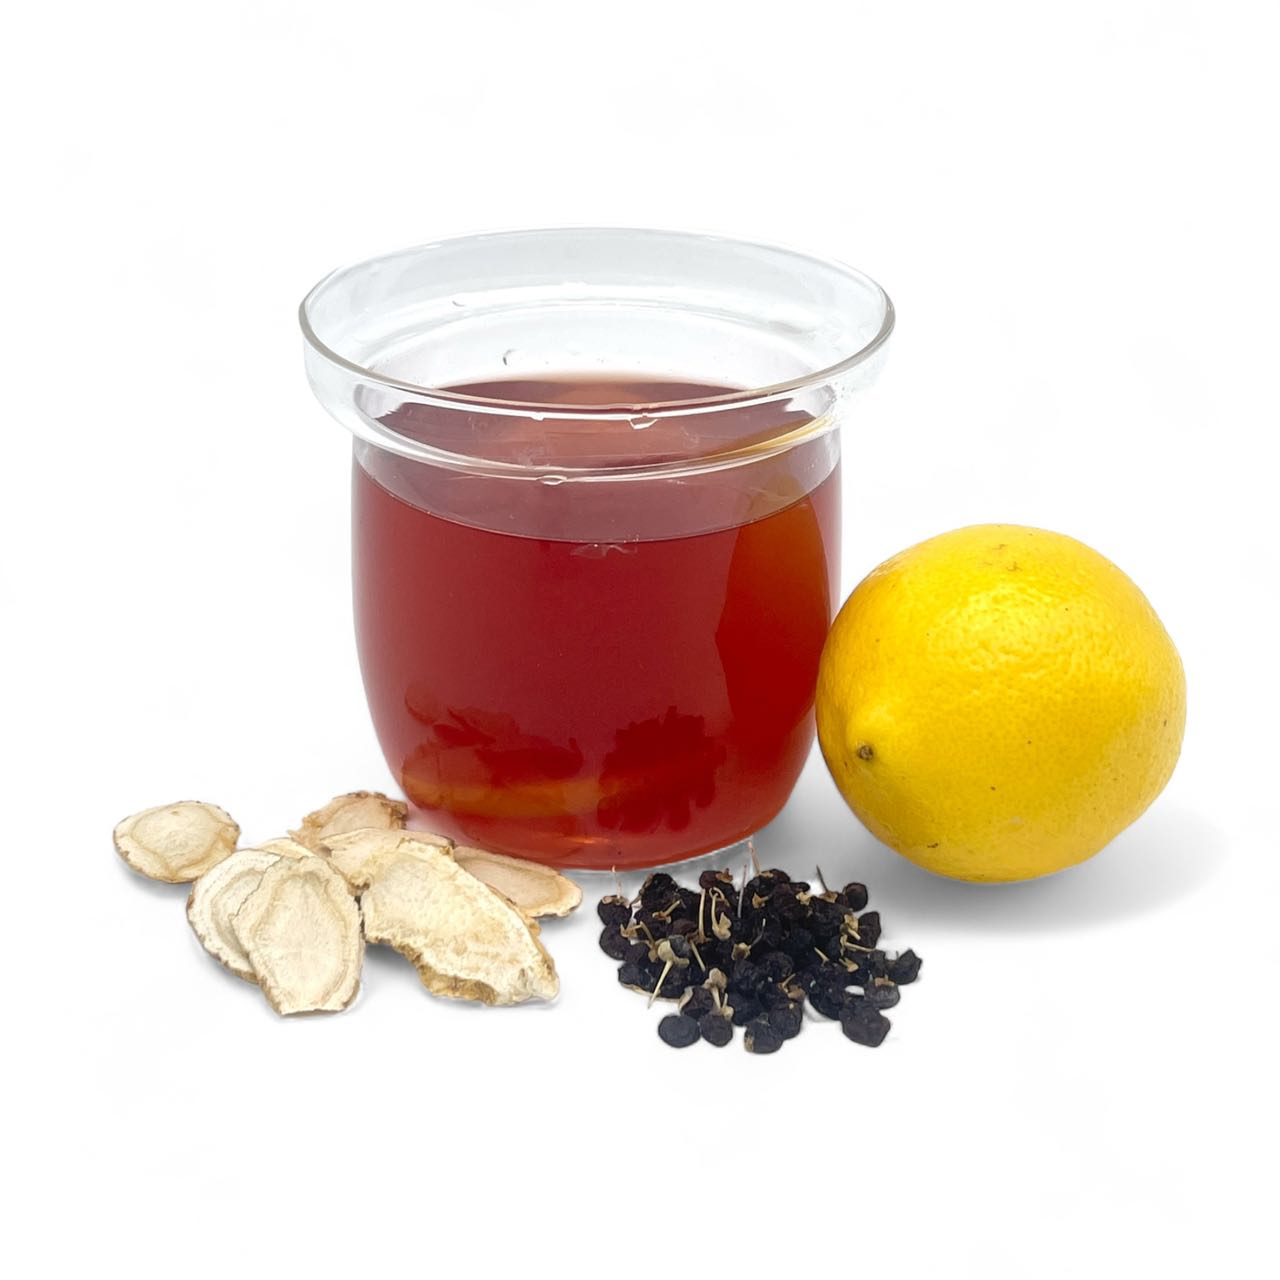 Ginseng, Lemon, and Black Goji Berry Tea